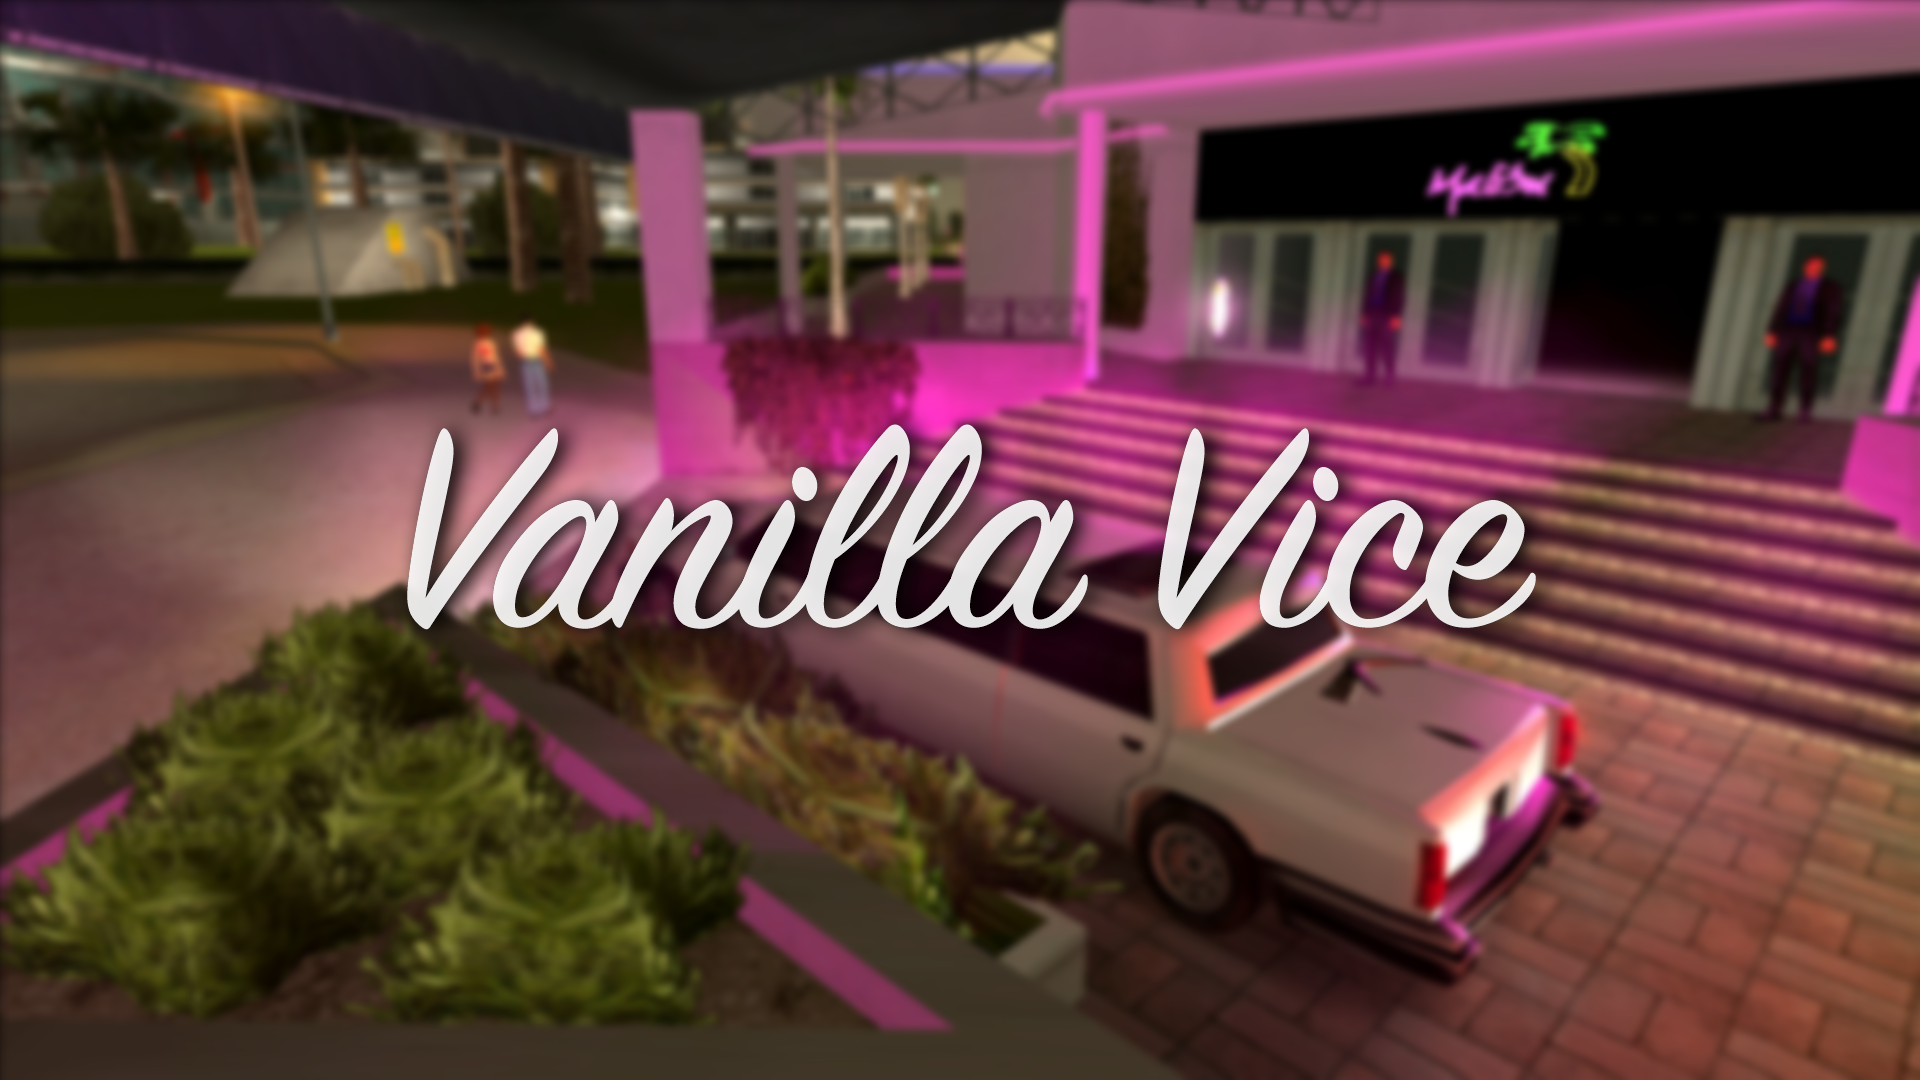 Ride On People Mod For GTA Vice City 2 - GTA: Vice City